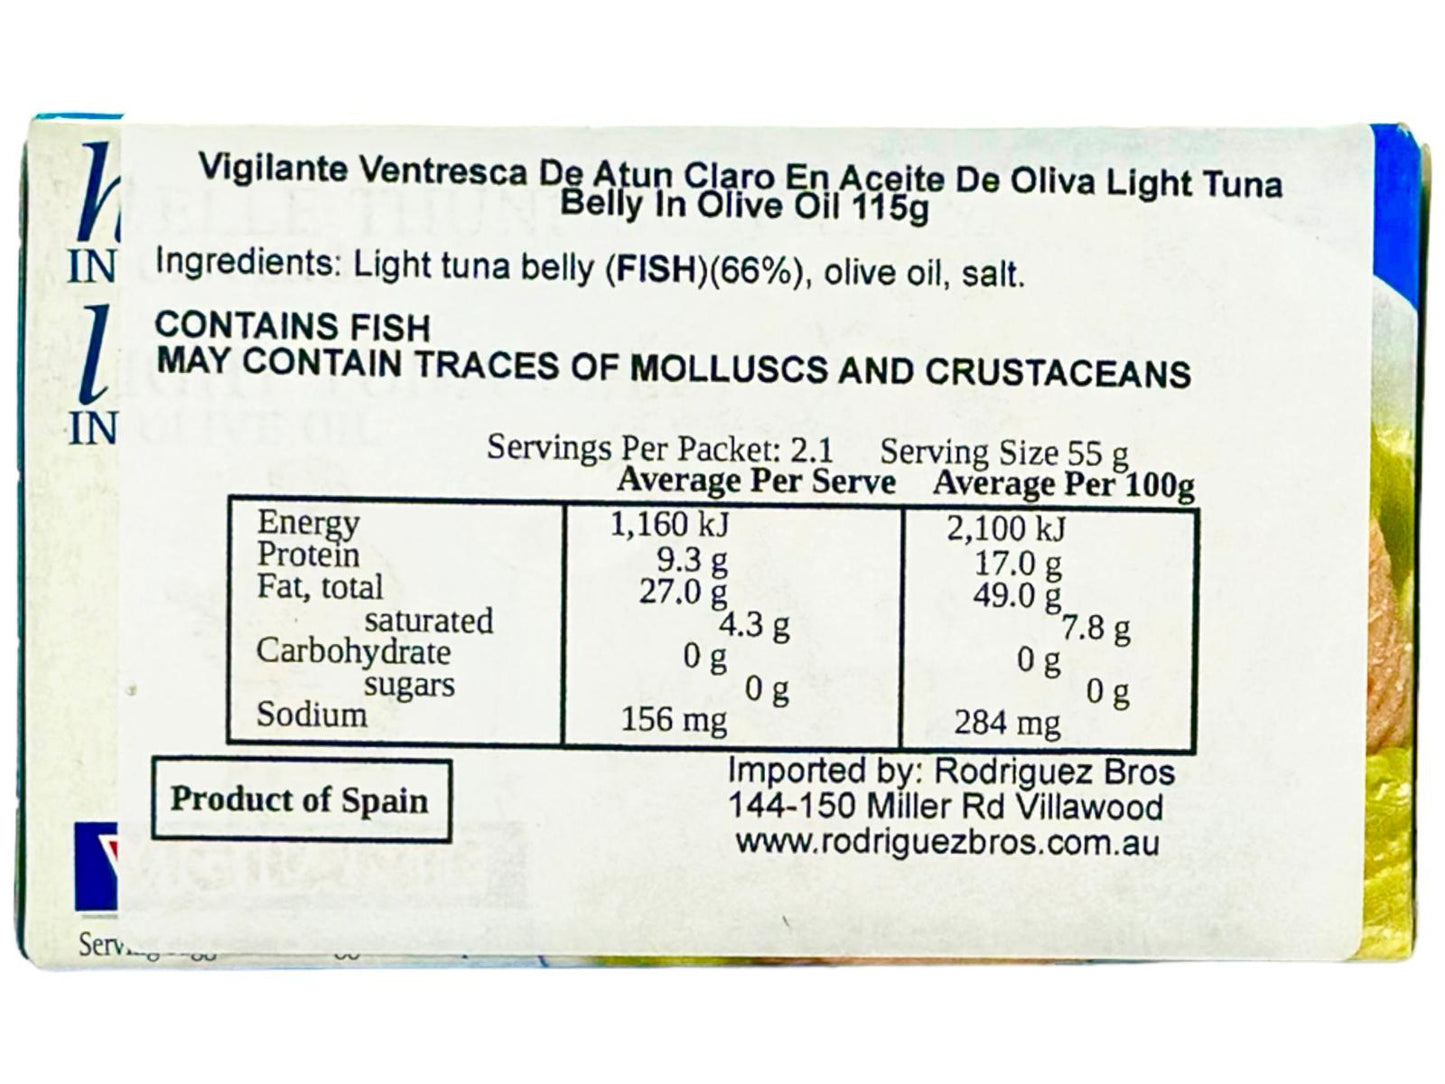 Vigilante Ventresca de Atun Claro en Aceite de Oliva Spain - Light Tuna Belly in Olive Oil 115g - 4 Pack Total 640g Best Before Jan 2027